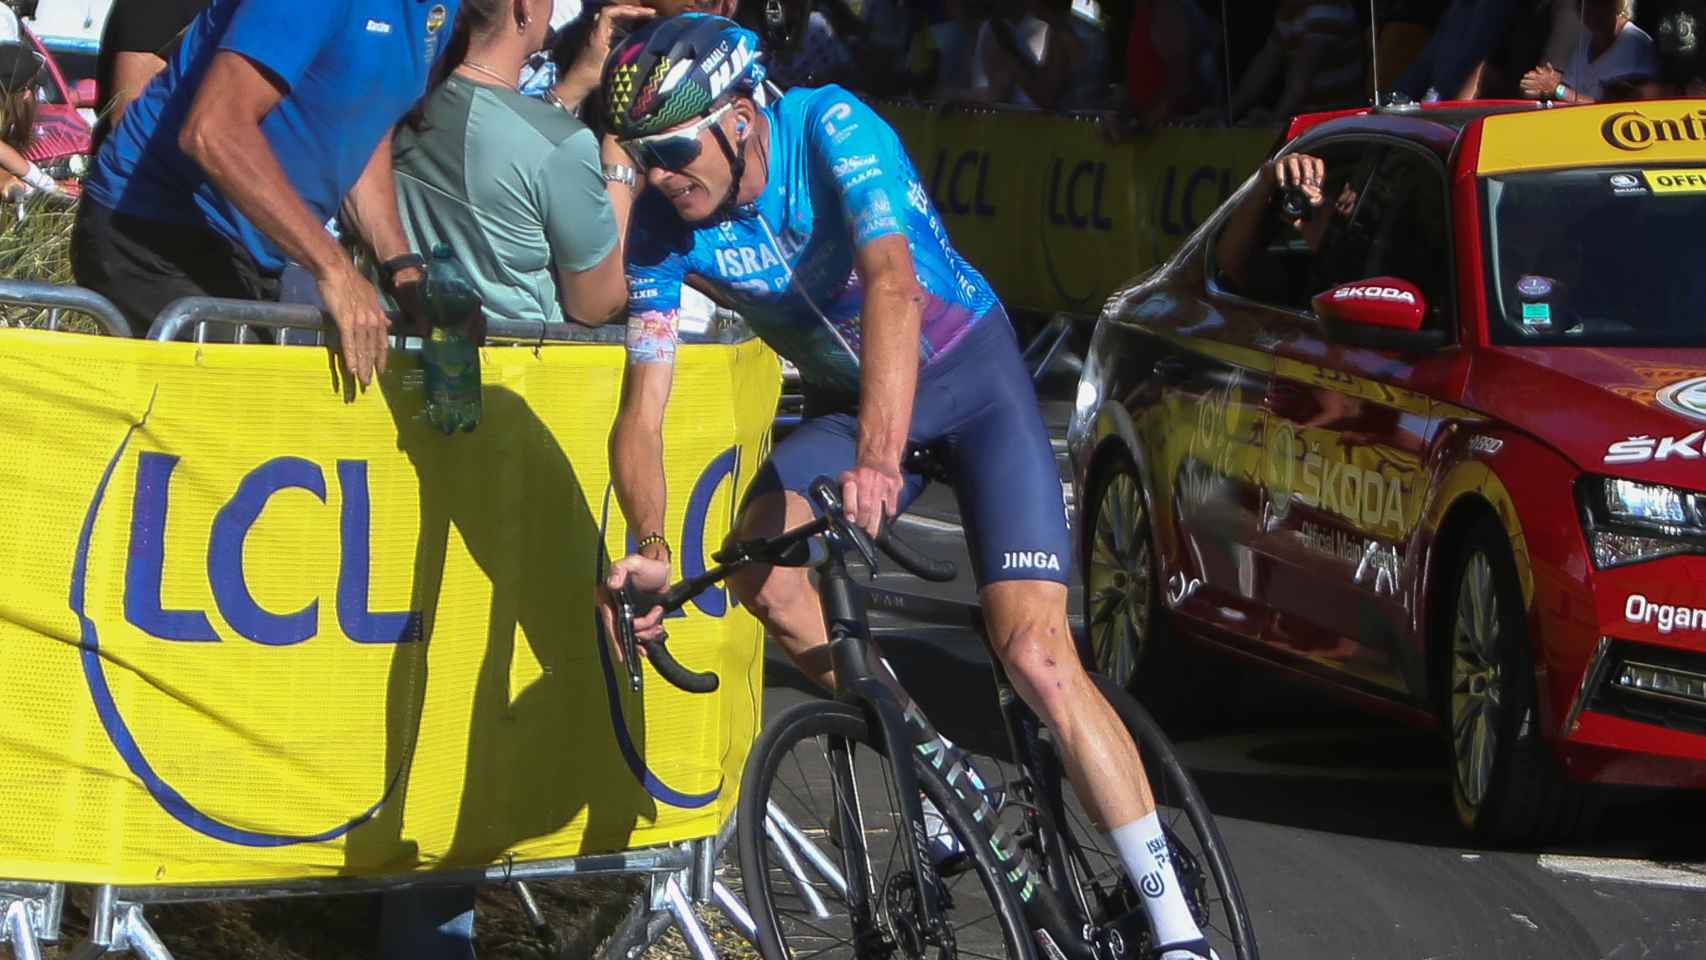 Chris Froome, durante el último Tour de Francia.